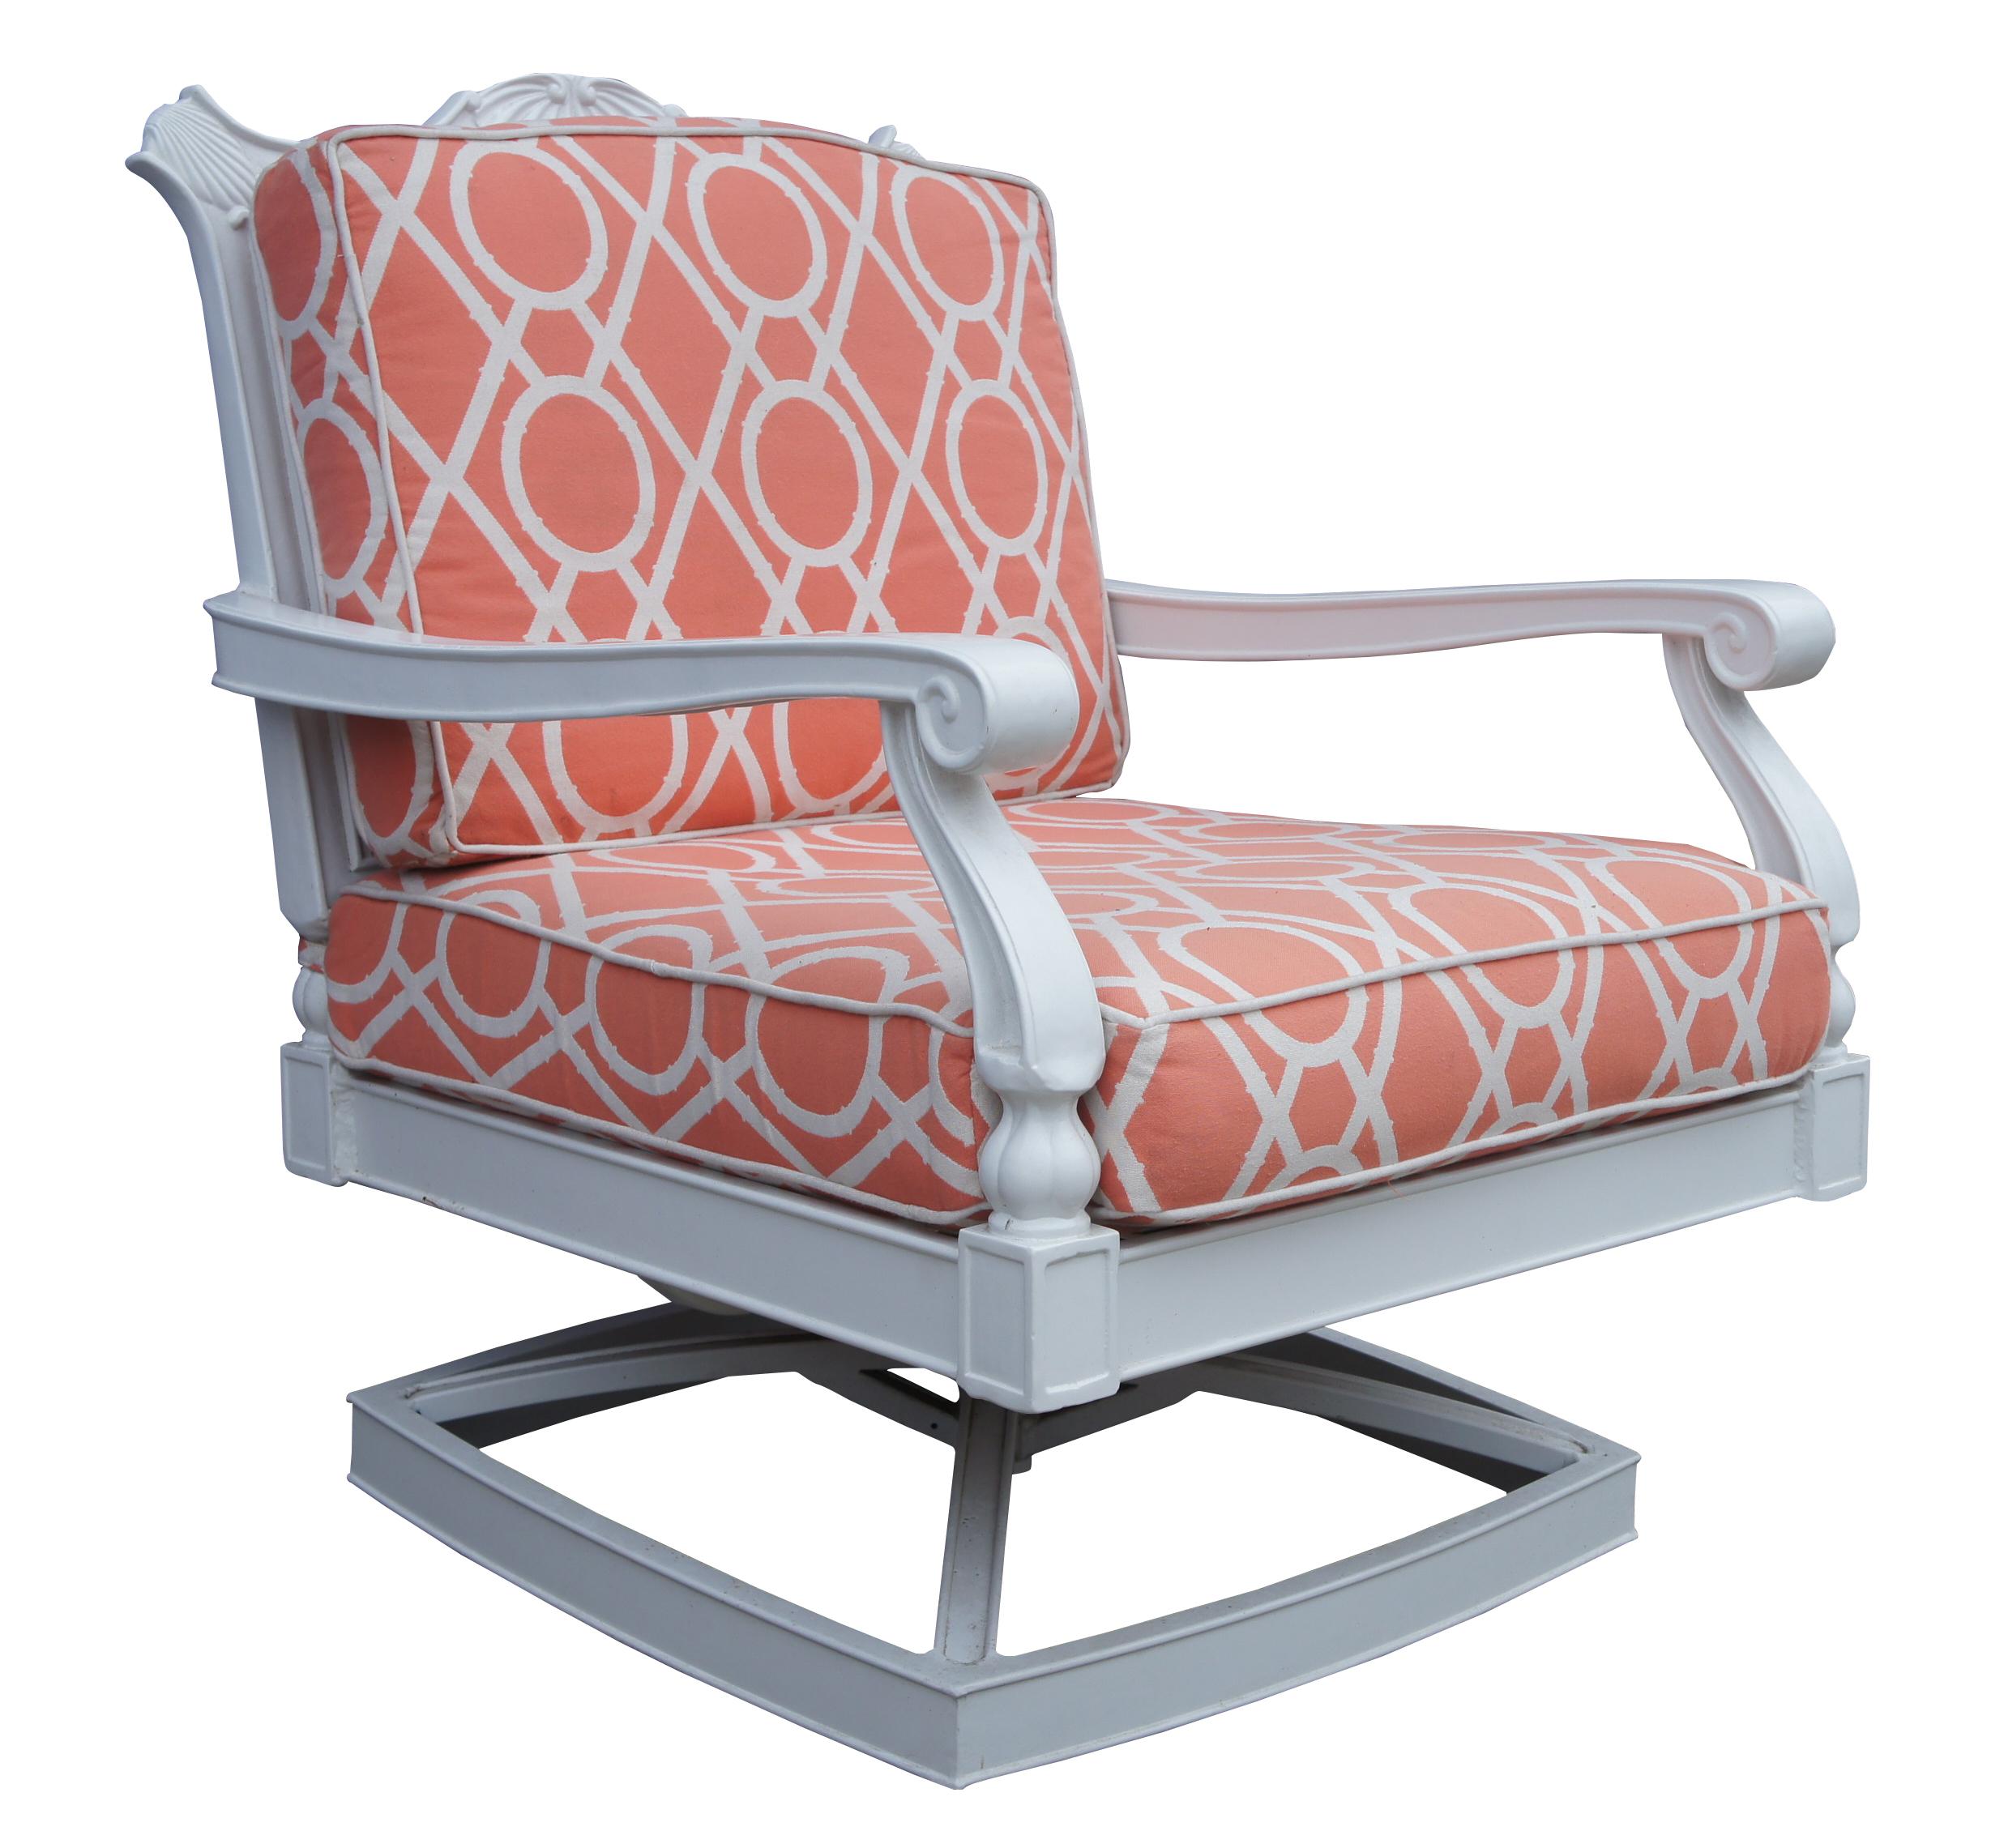 Frontgate aluminum Glen Isle swivel lounge cushion chair geometric peach 48012

